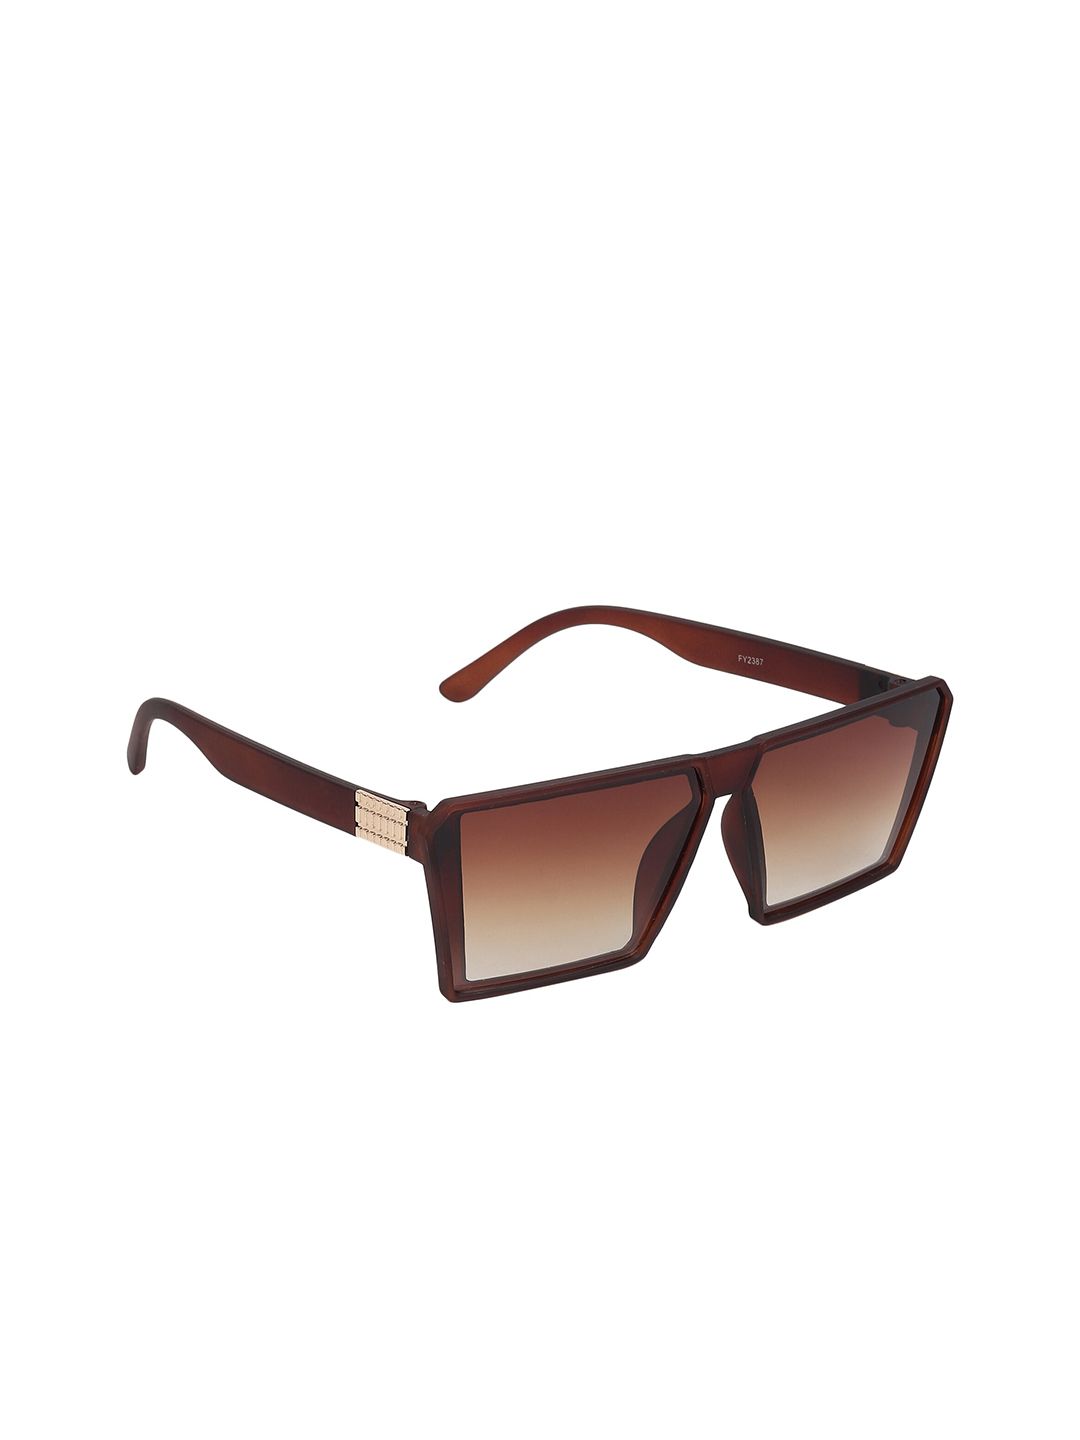 ALIGATORR Unisex Brown Lens & Black Square Sunglasses with UV Protected Lens Price in India